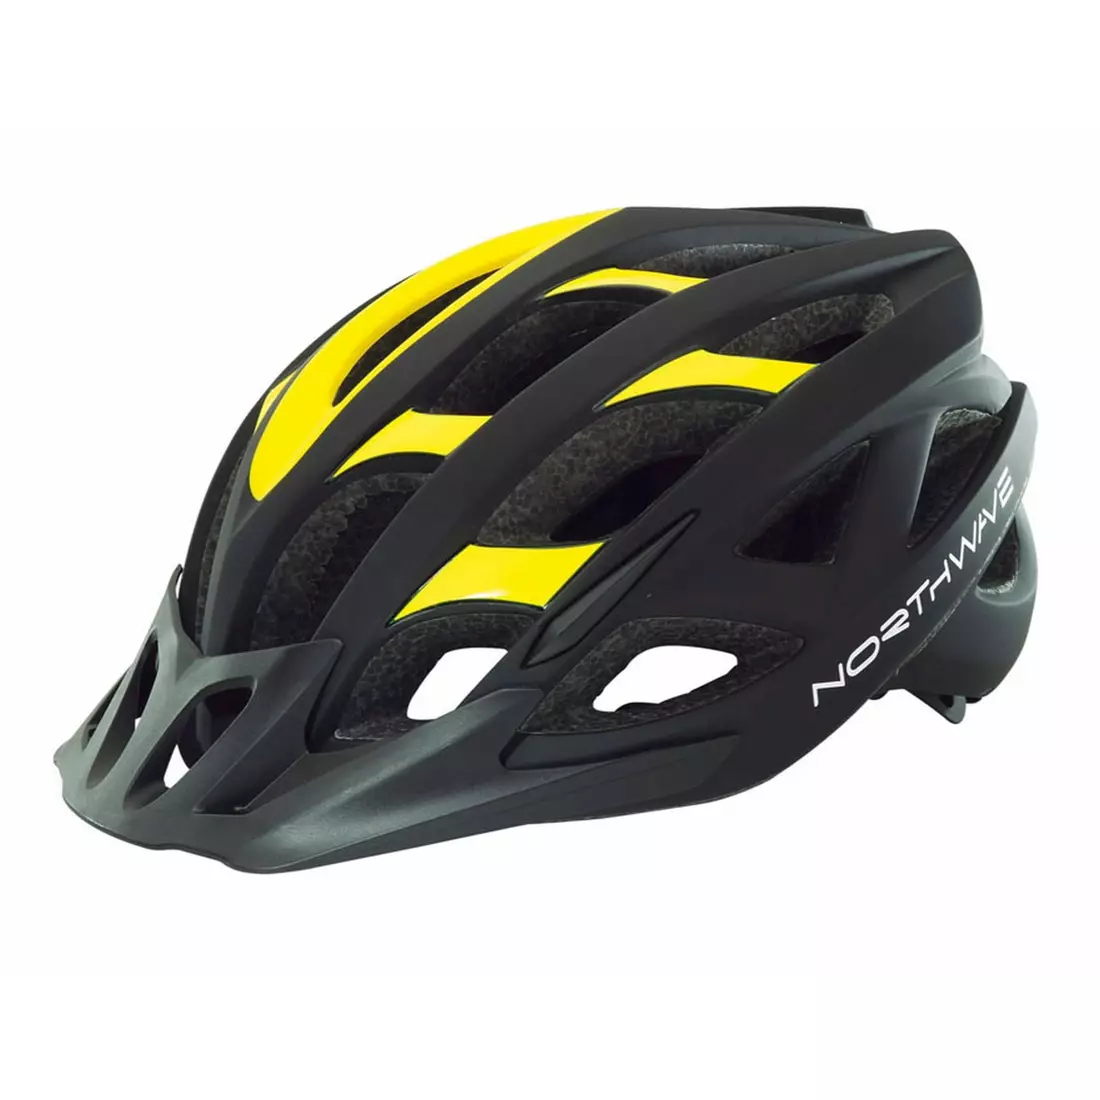 NORTHWAVE RANGER bicycle helmet, black and yellow